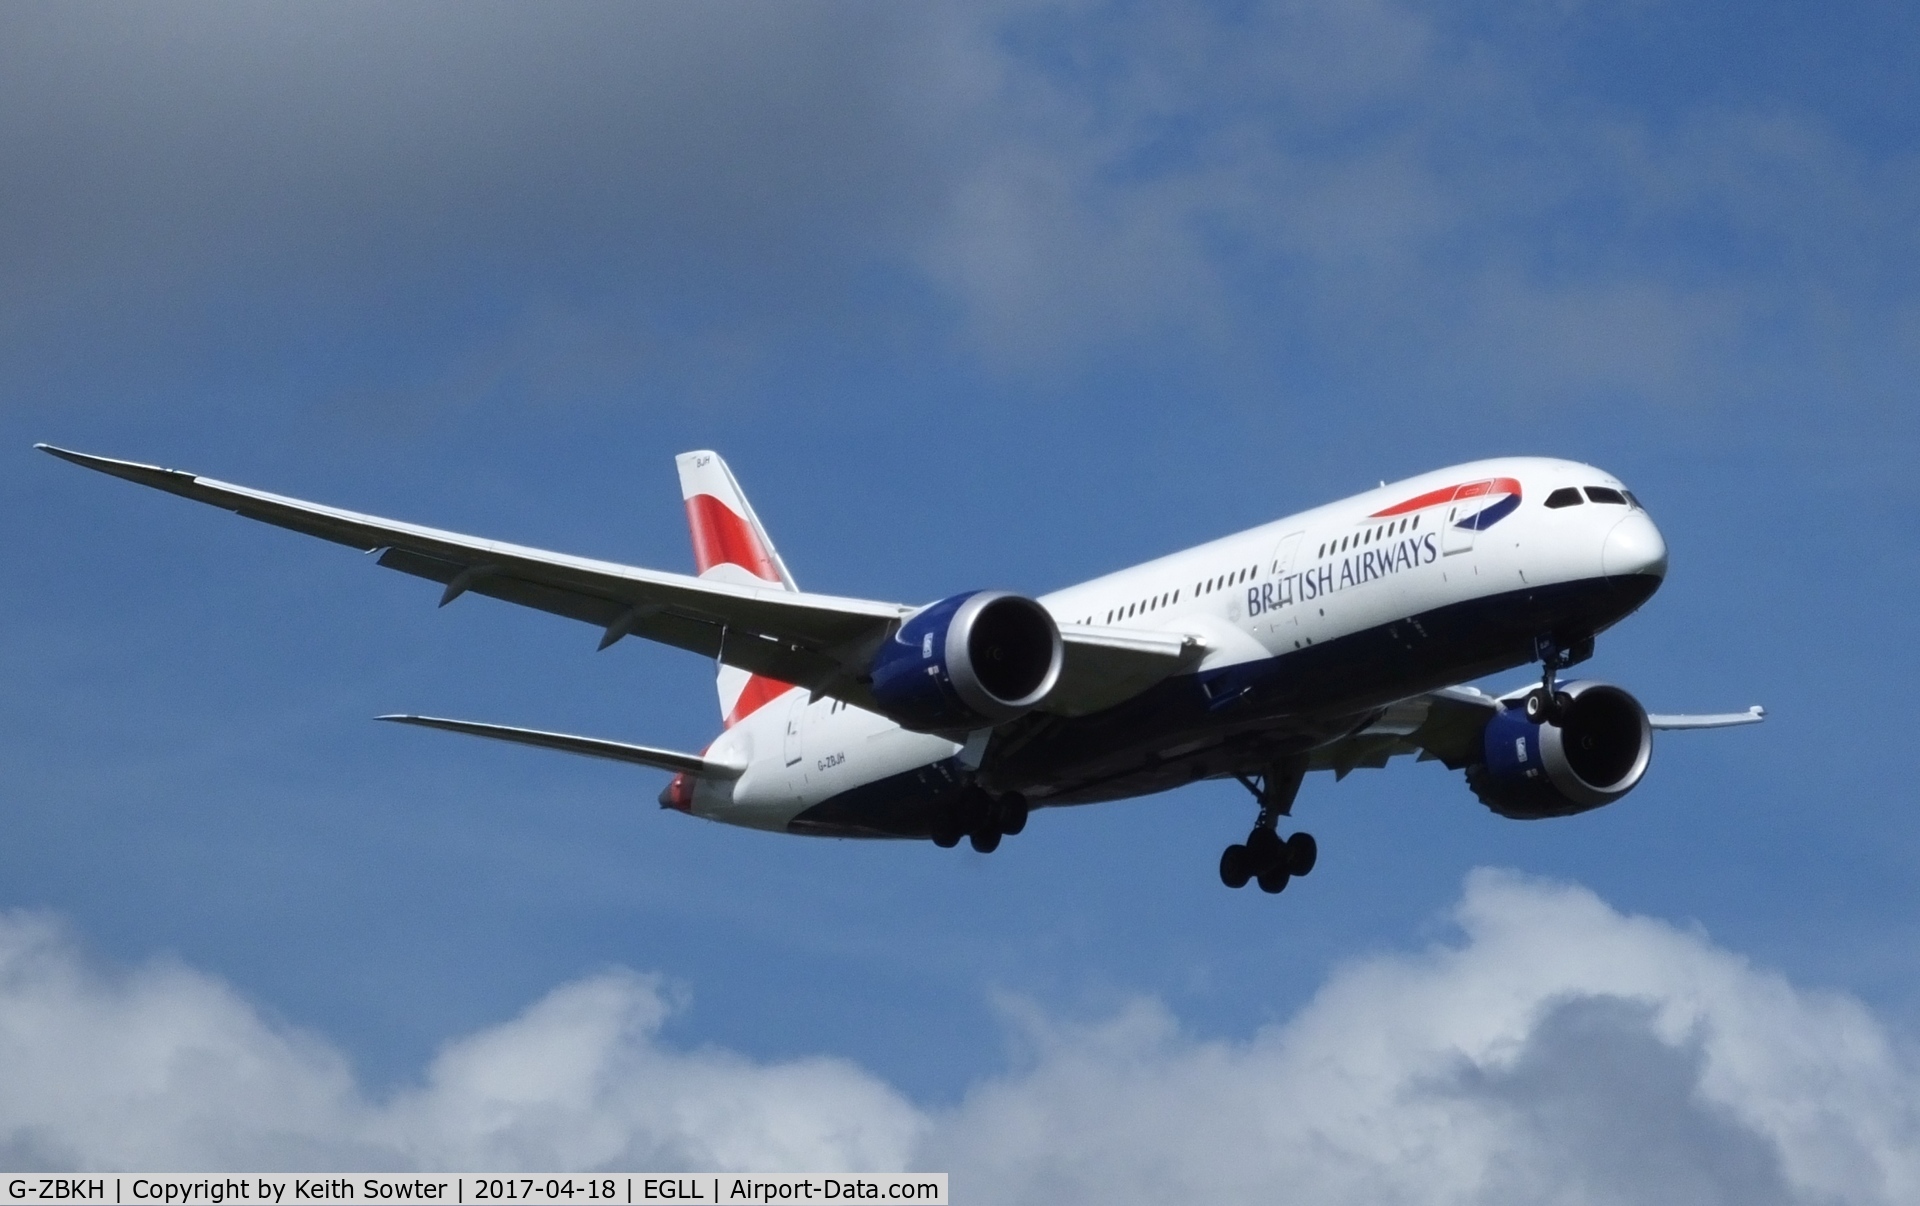 G-ZBKH, 2016 Boeing 787-9 Dreamliner C/N 38624, Short finals to land on runway 09L at Heathrow